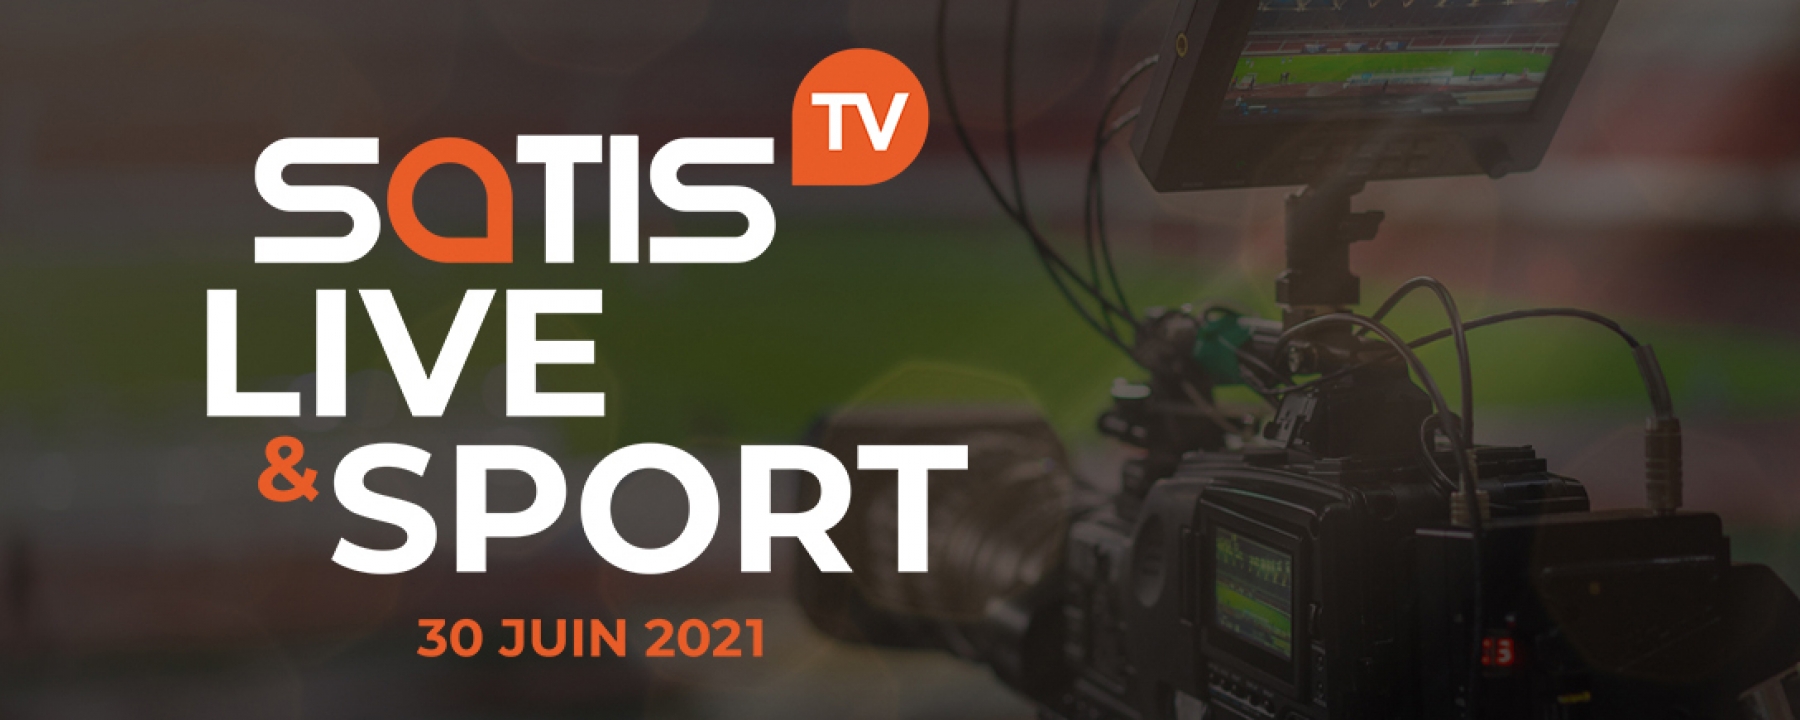 SATIS TV - Live & Sport